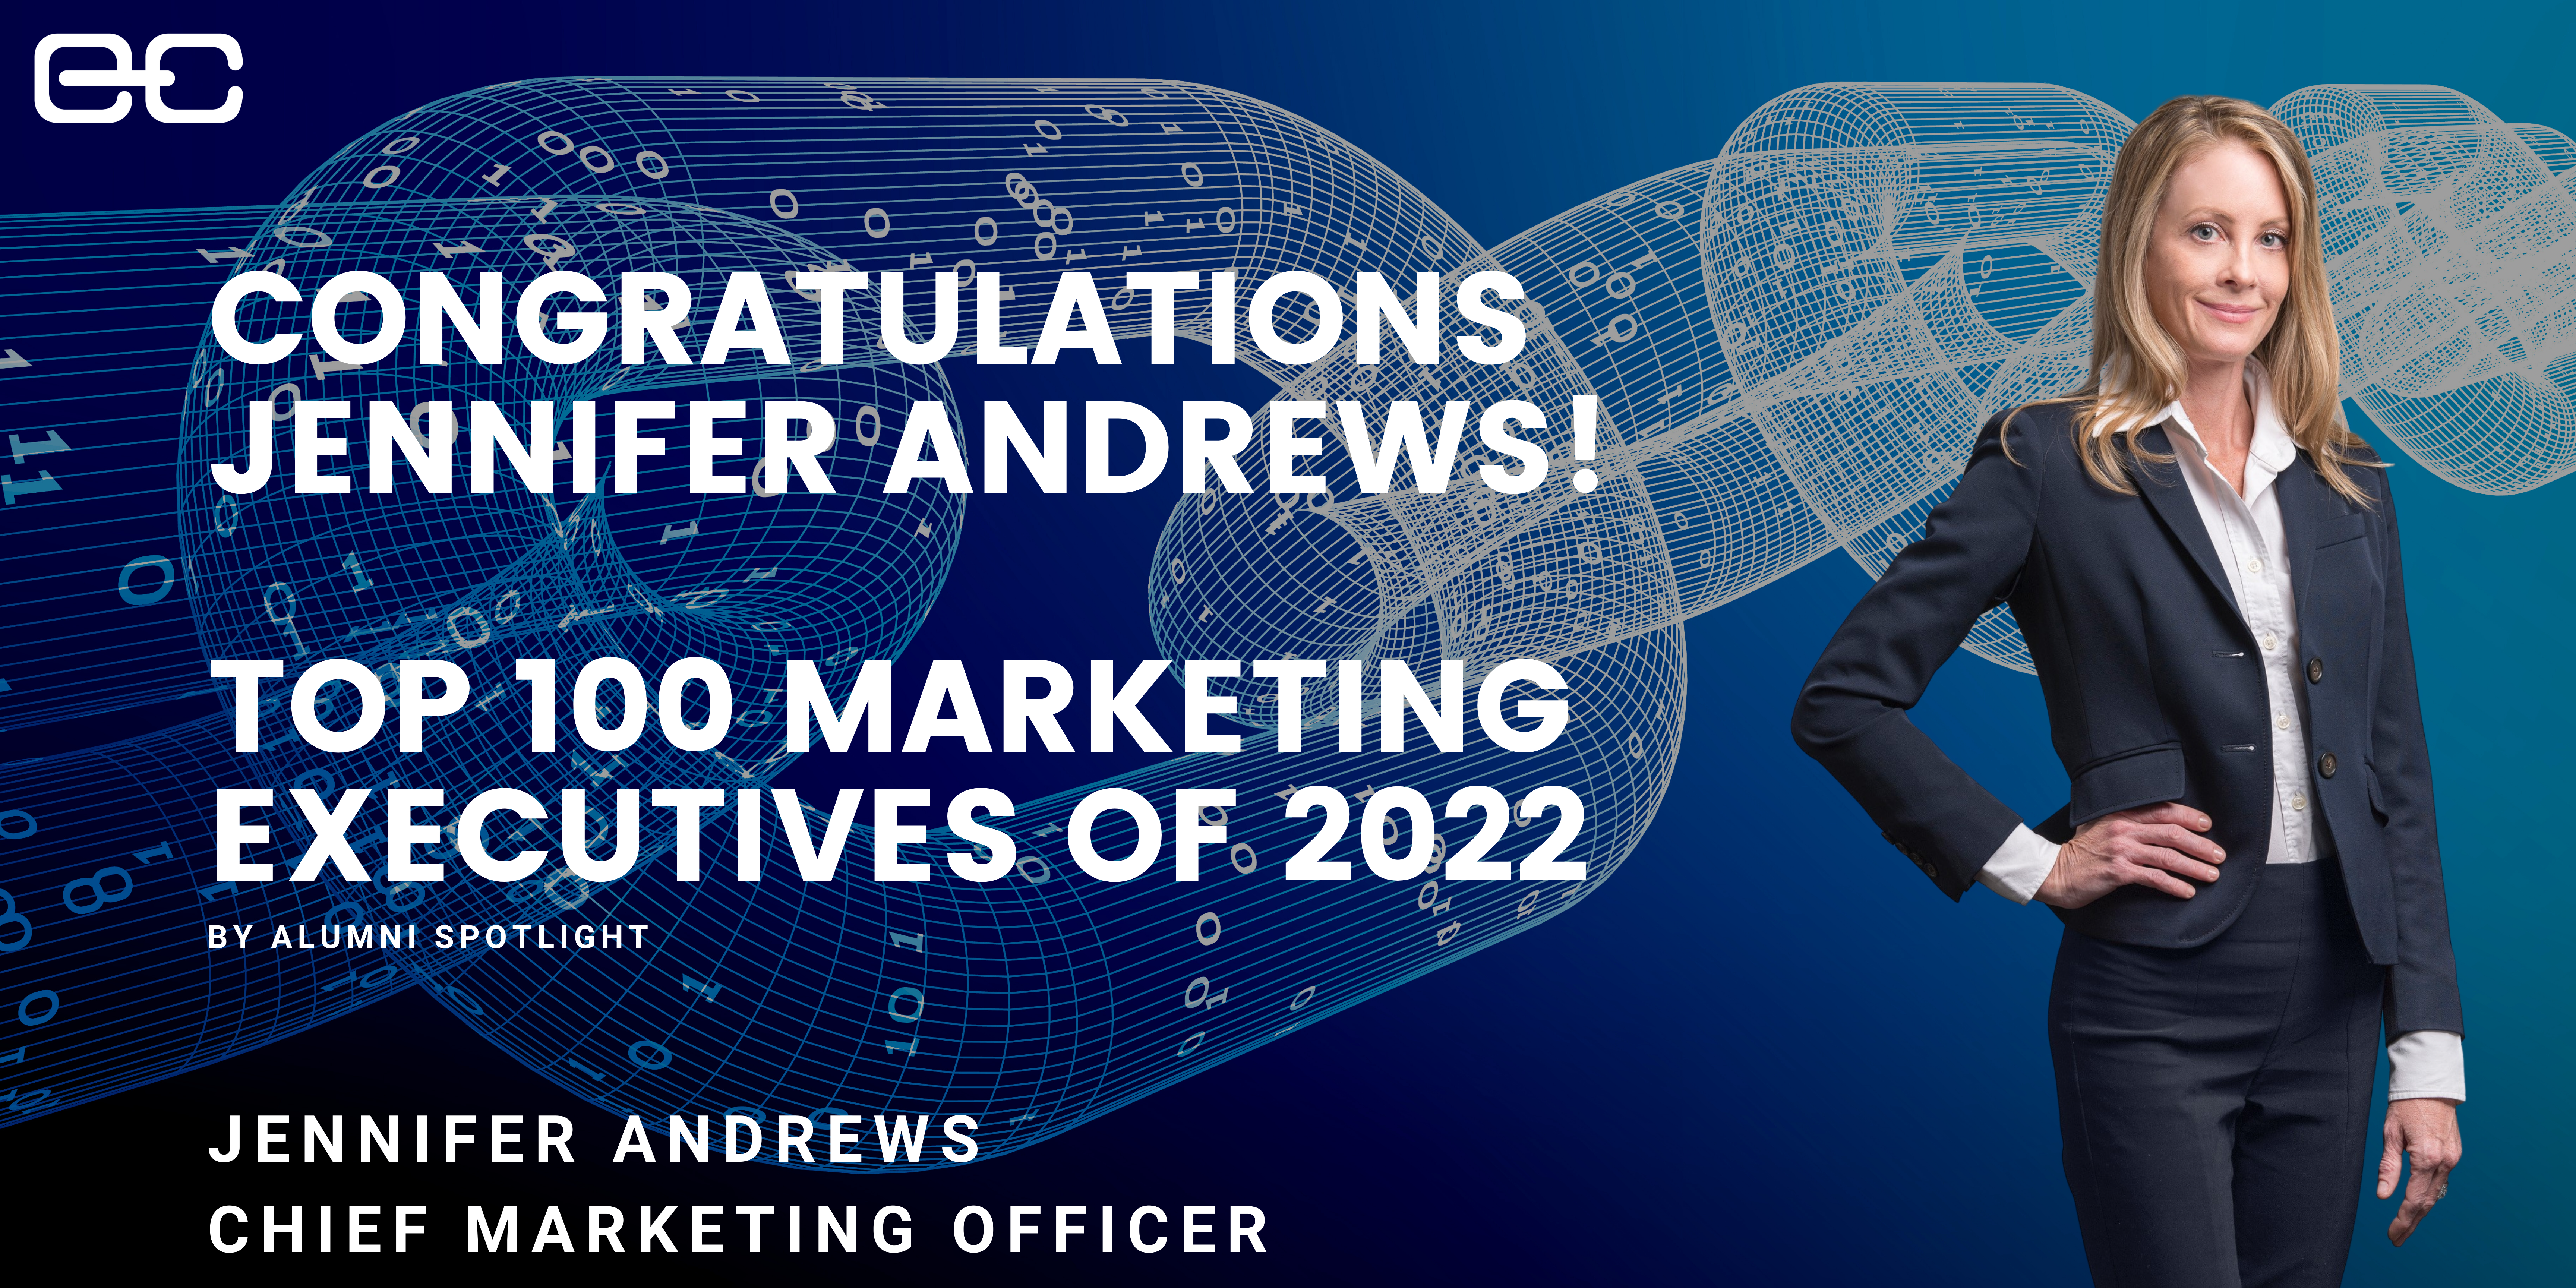 Jennifer Andrews named Top 100 Marketing Executives of 2022